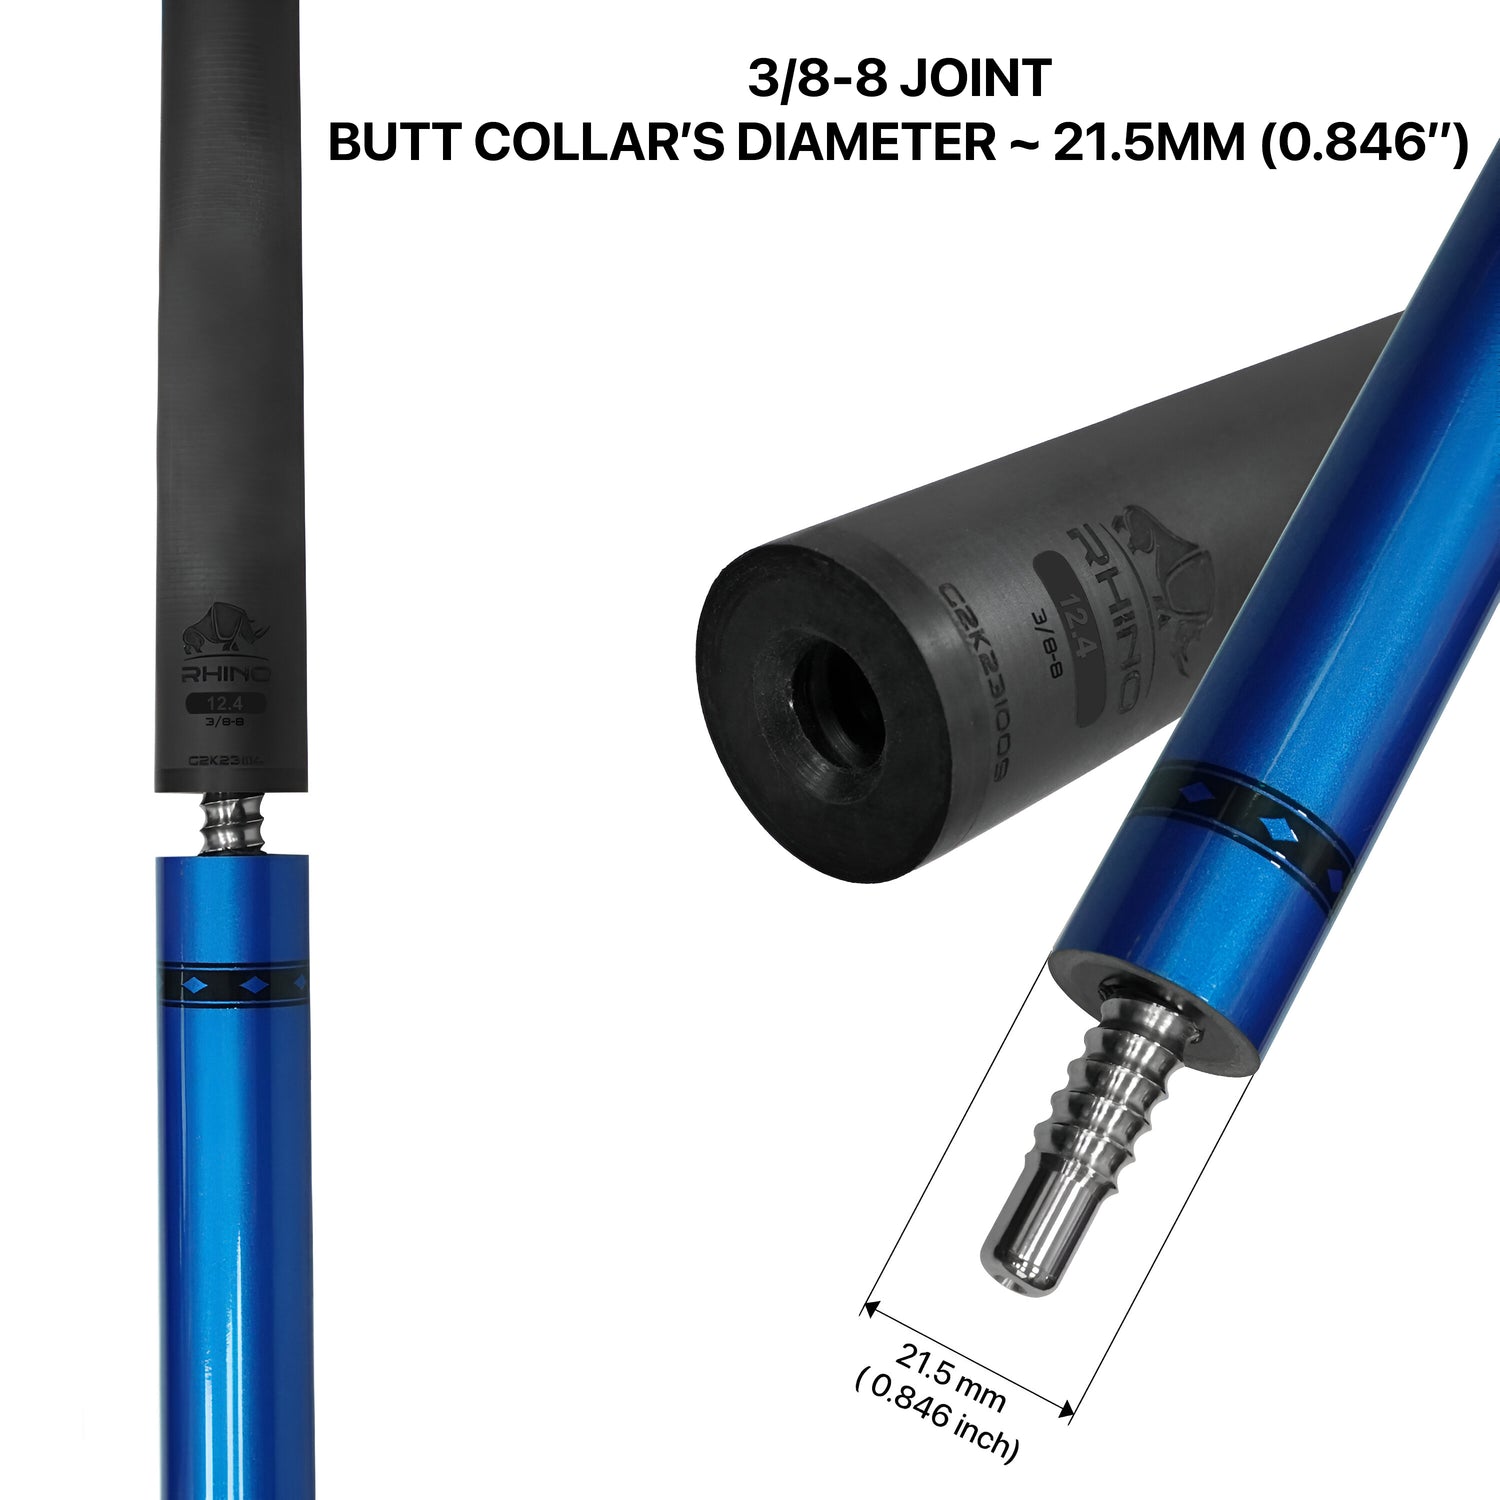 Nebula Pool Cue - Blue (3/8-8 Joint) - 12.4 mm Tip Diameter